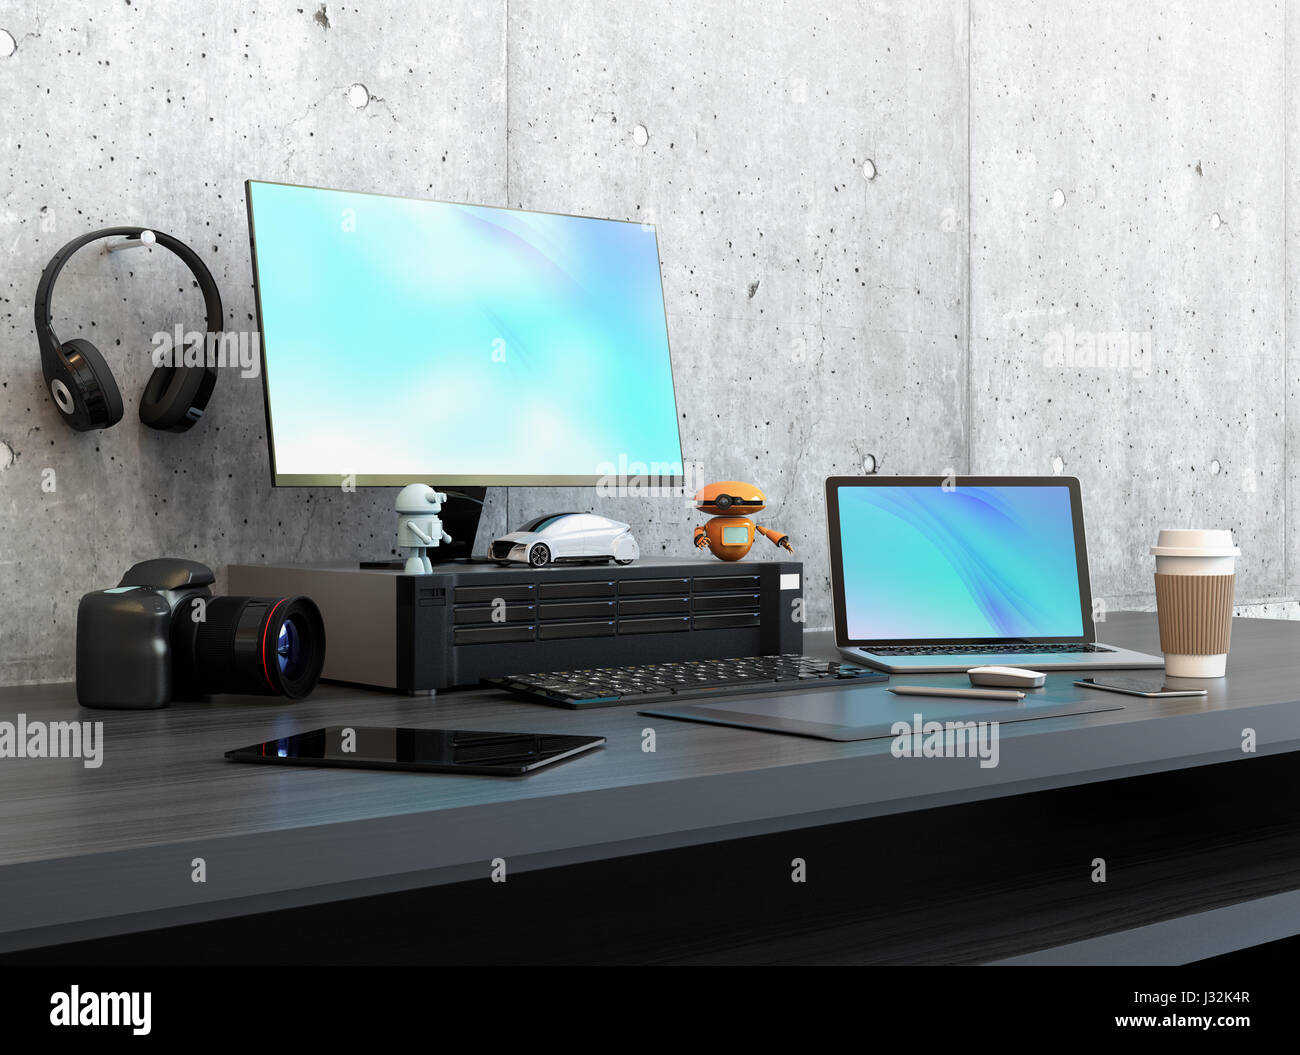 https://c8.alamy.com/compes/j32k4r/con-monitor-panoramico-de-escritorio-estacion-de-trabajo-portatil-representacion-3d-imagen-j32k4r.jpg